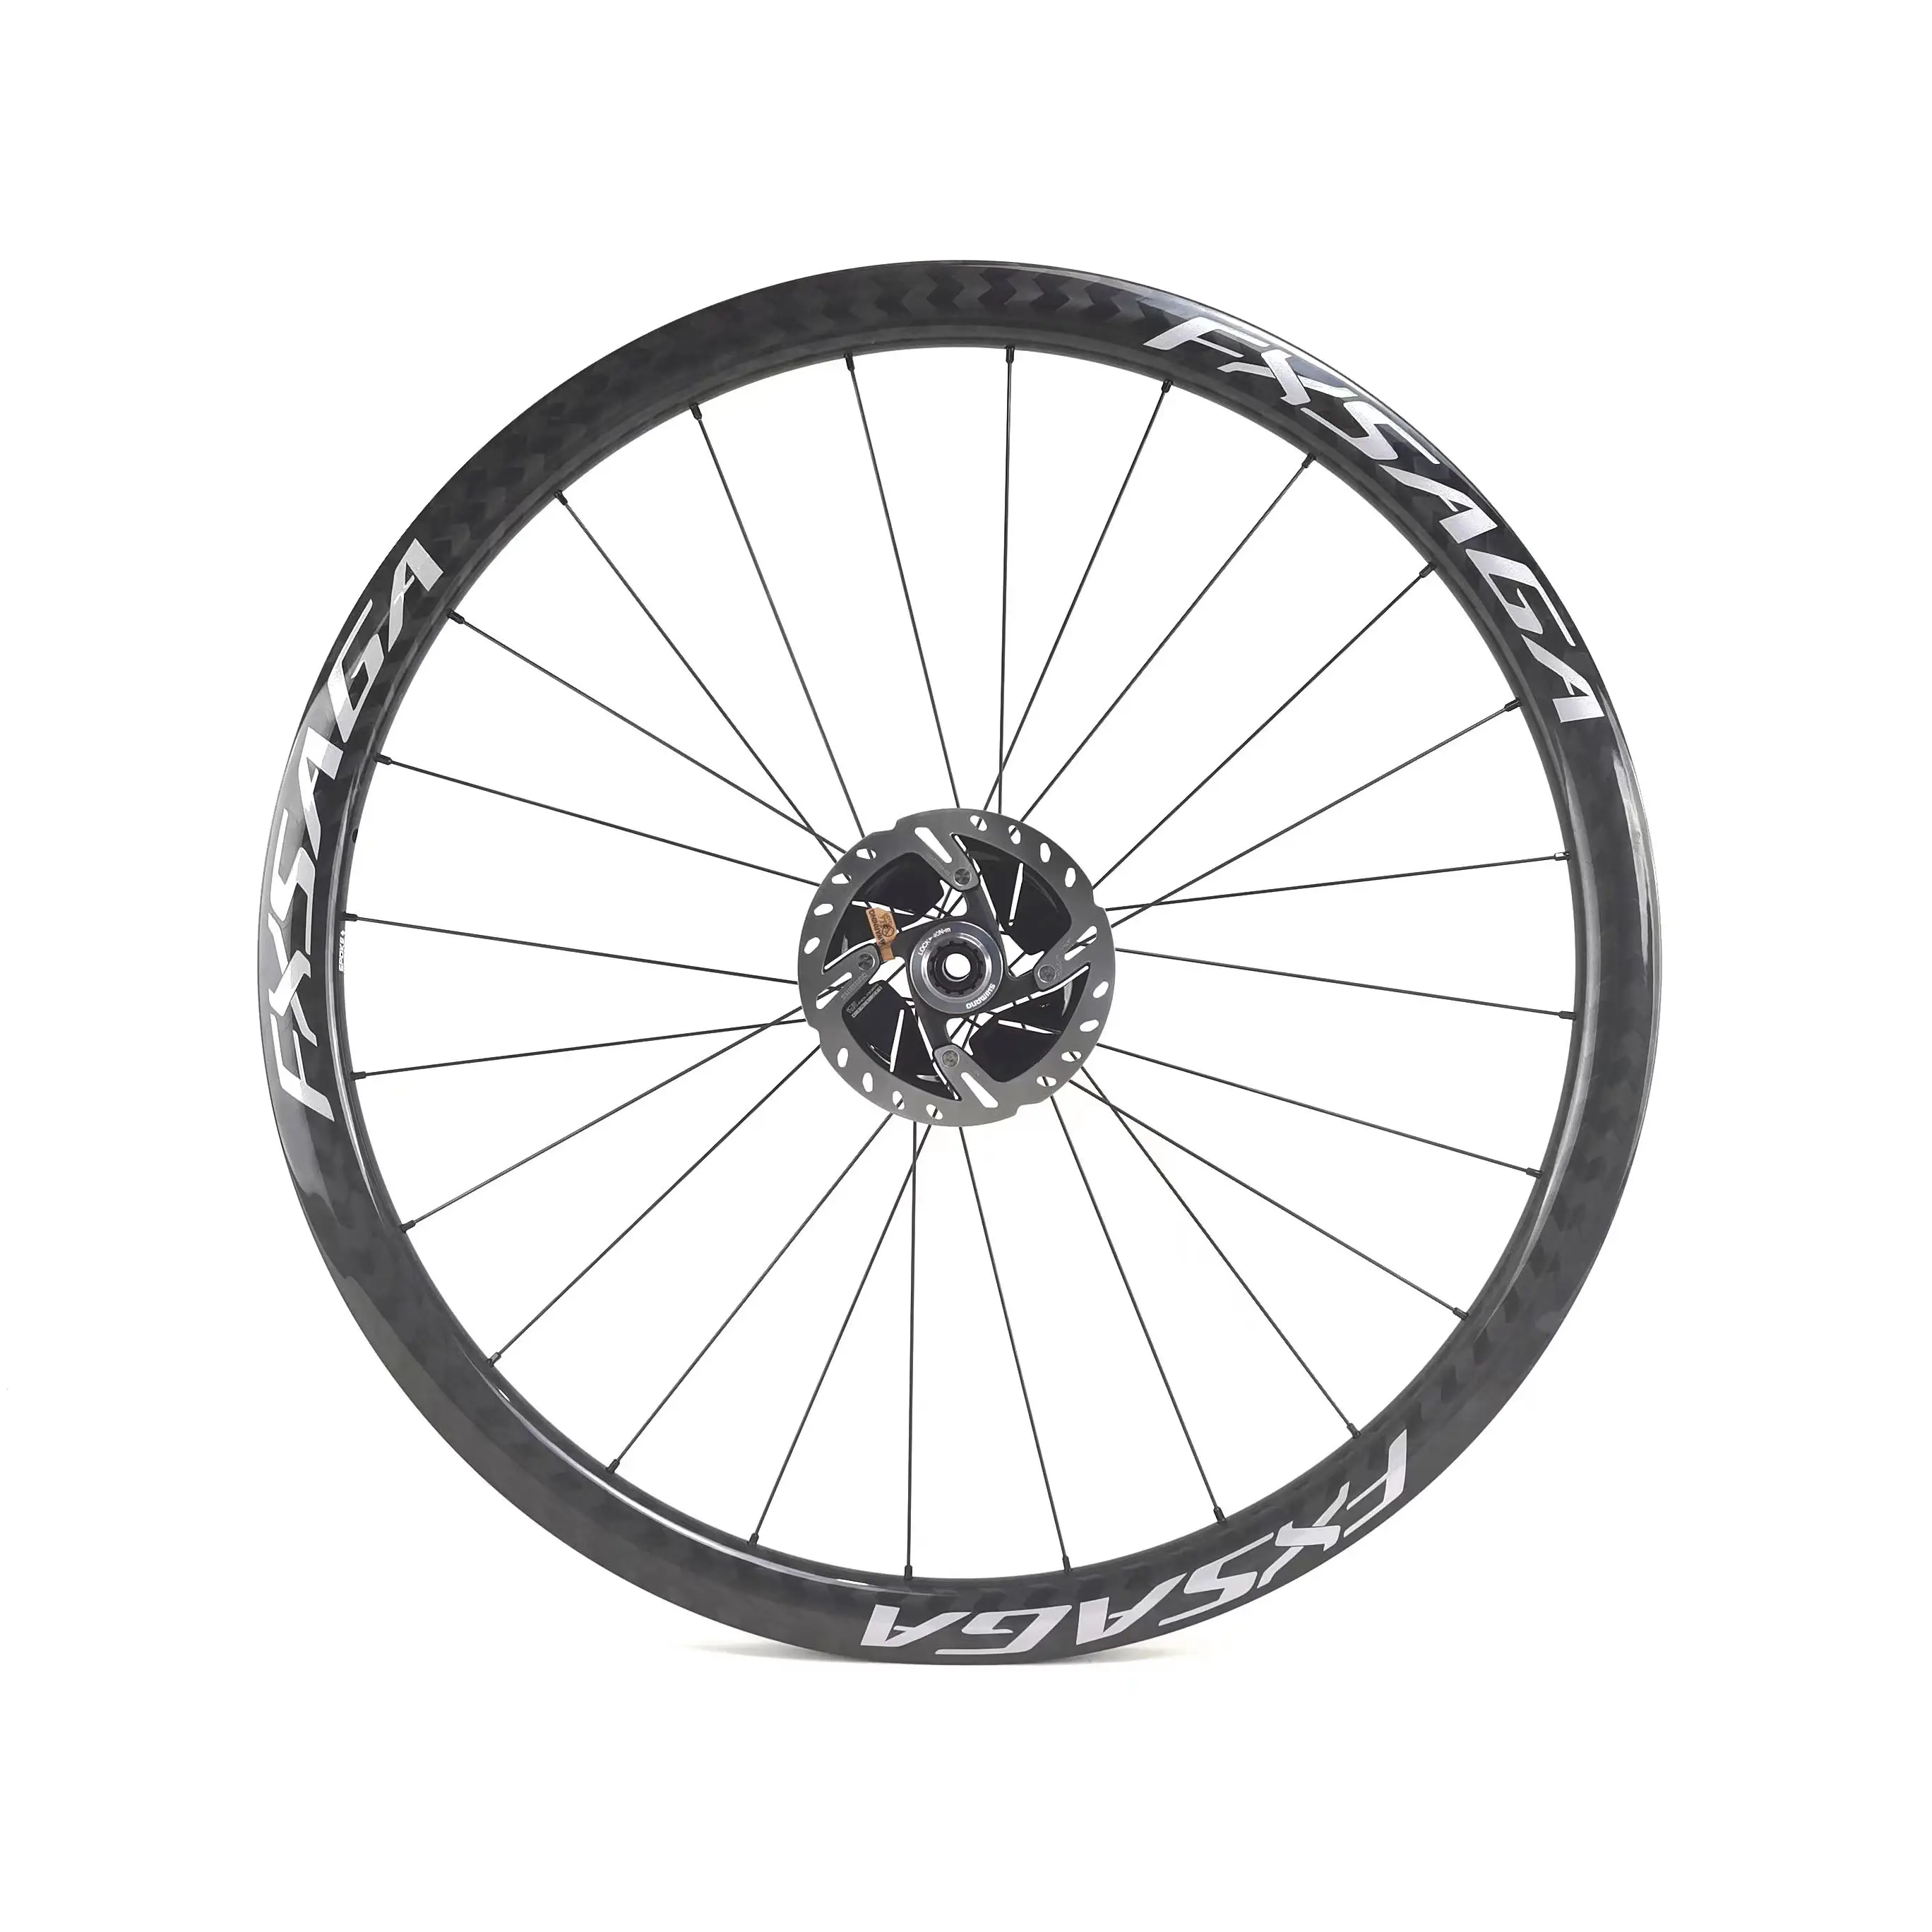 CX7 wheel set carbon fiber wheel 700c disc brake bicycle carbon fiber wheel